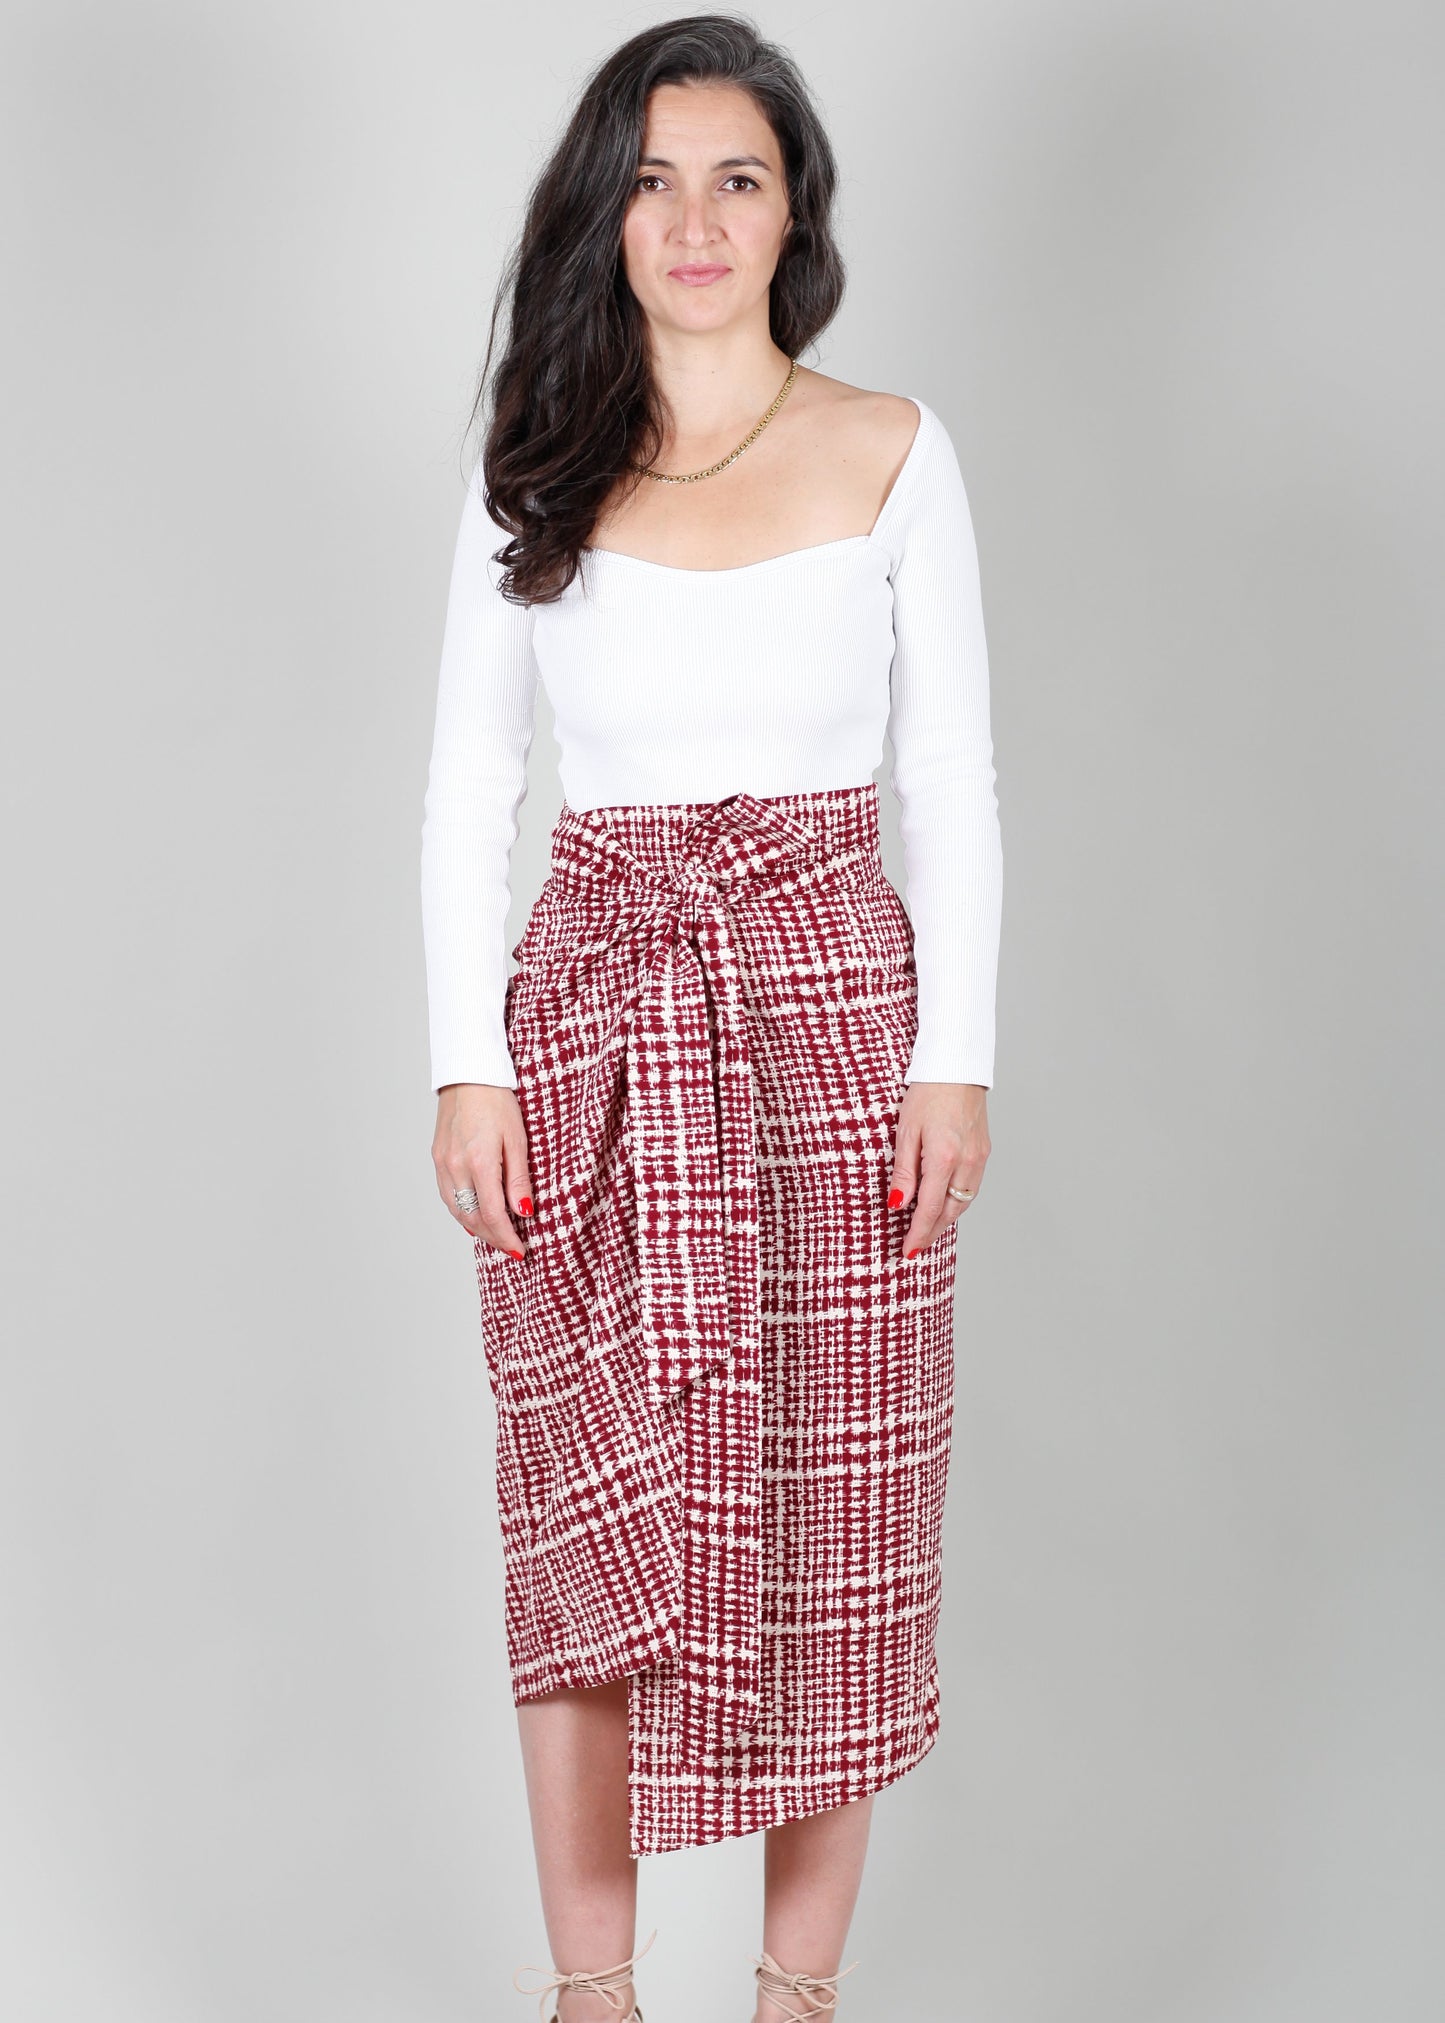 Laetitia Wrap Skirt - PDF Sewing Pattern